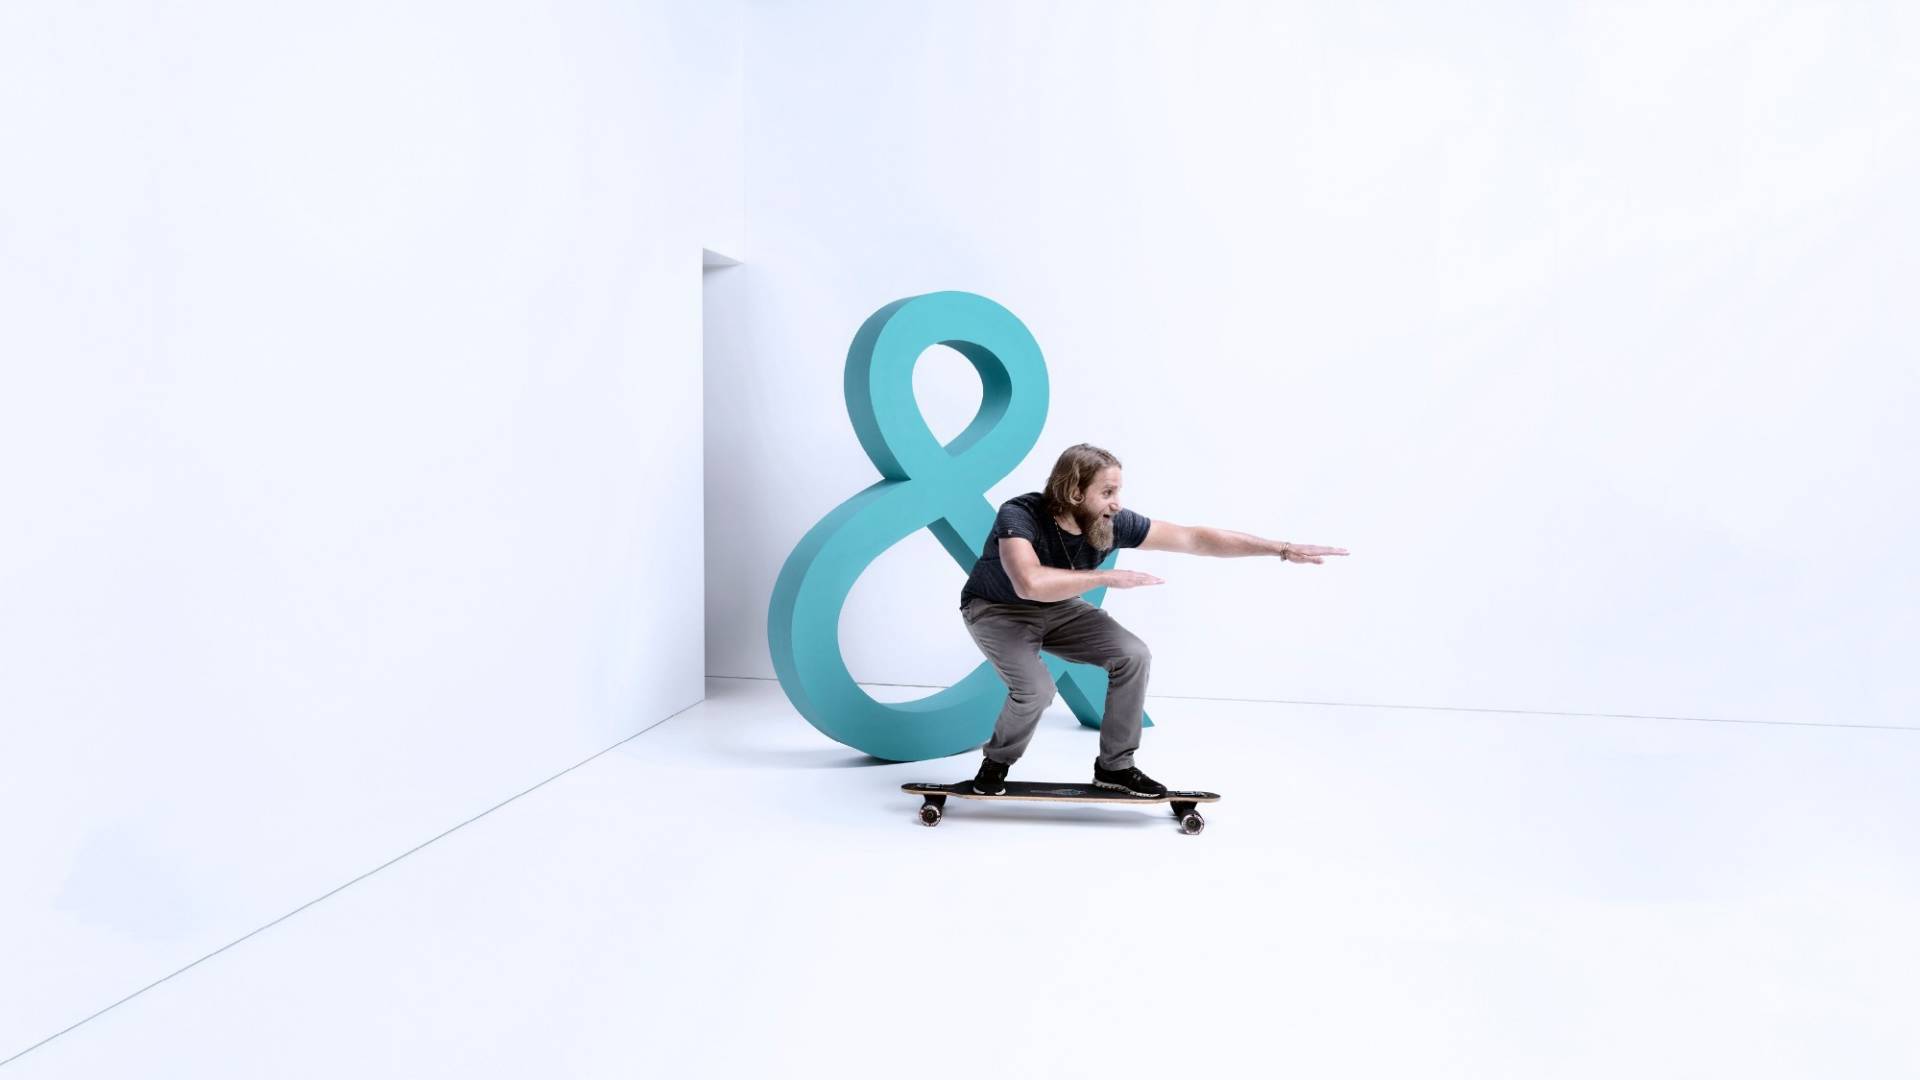 : A man gliding gleefully on a skateboard through a white room.